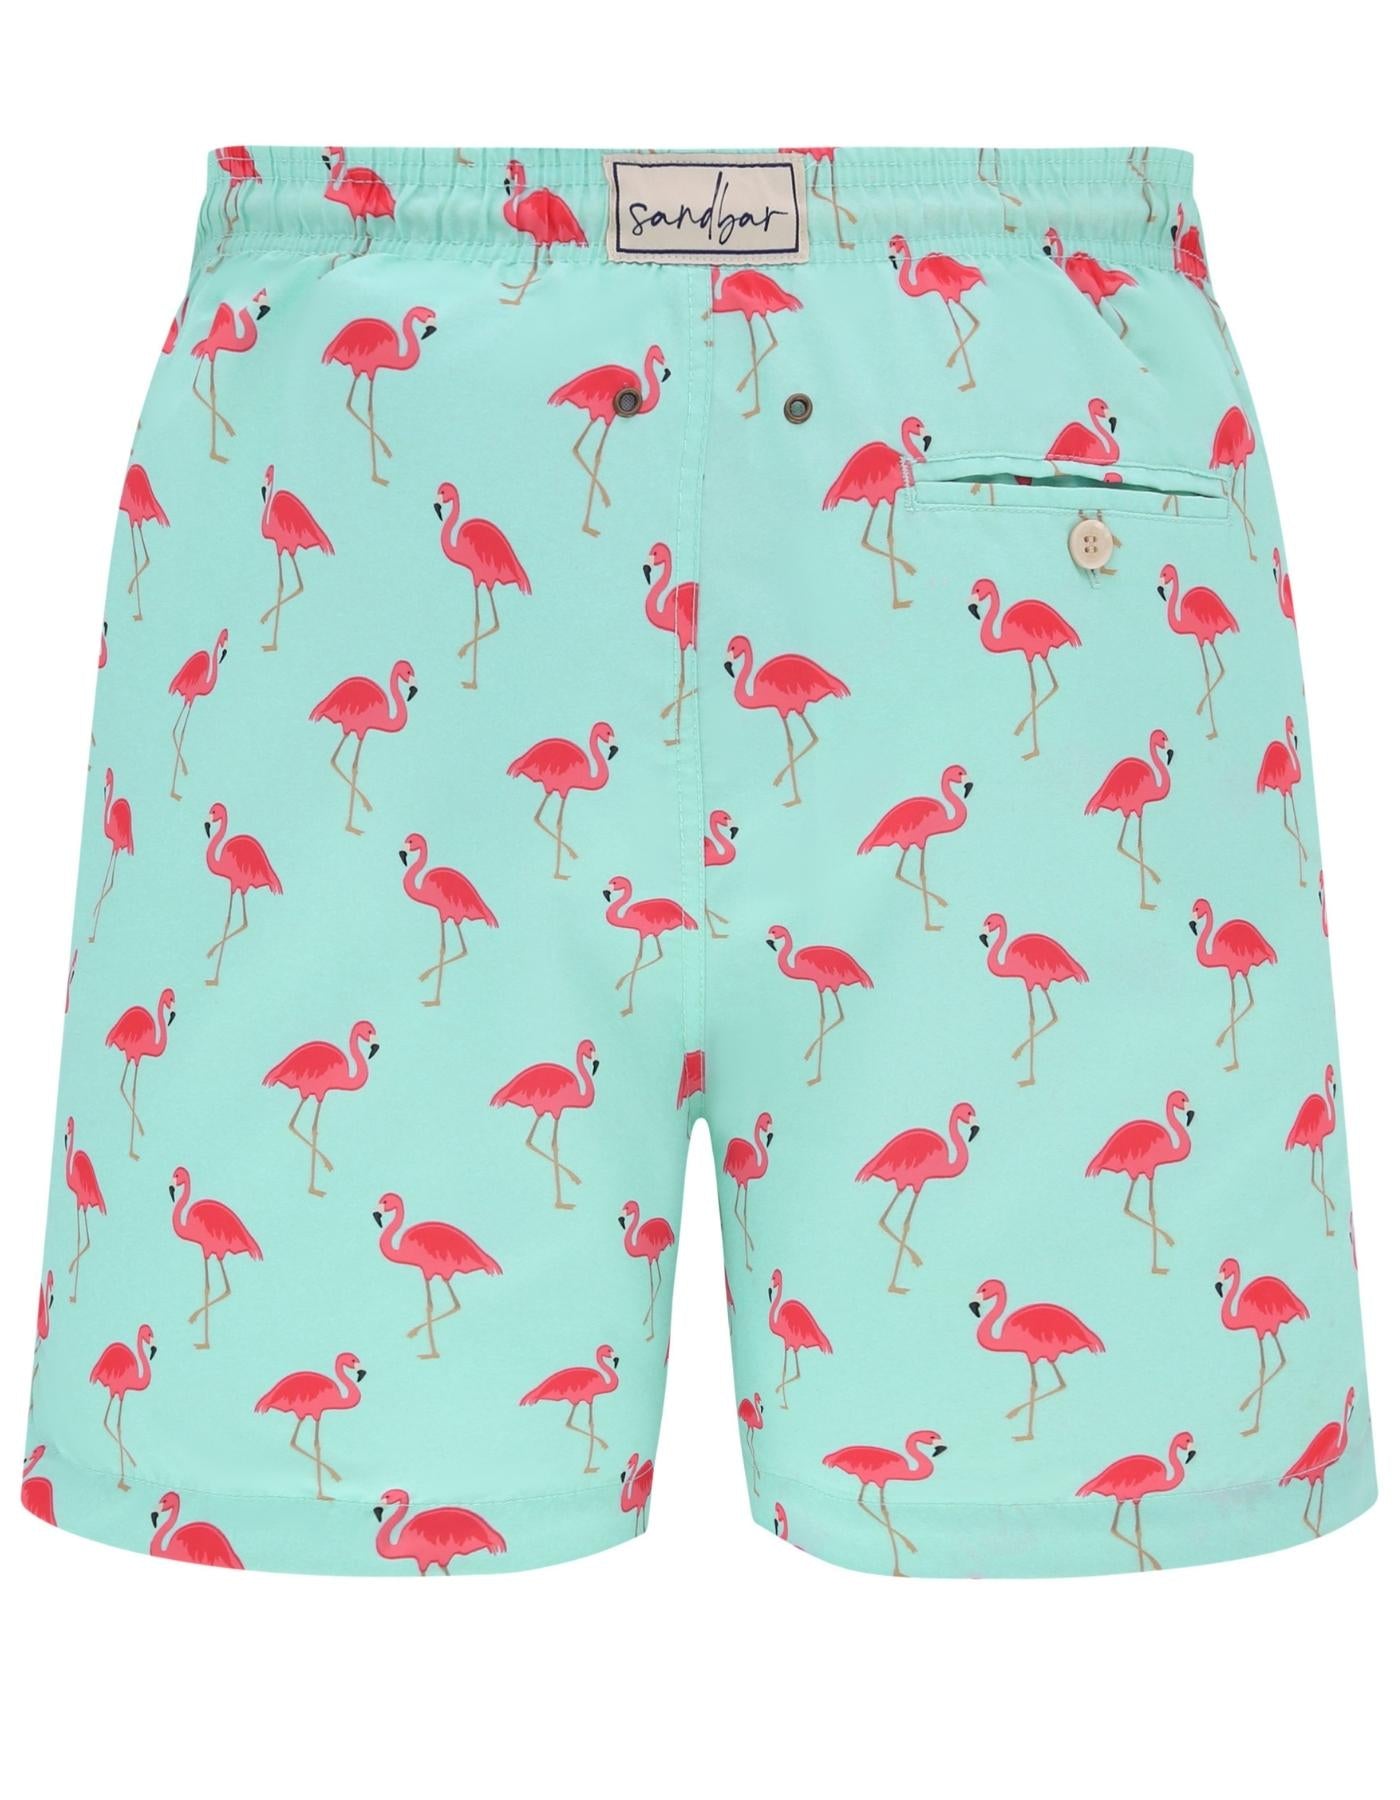 Sandbar_father_and_son_swim_shorts_pink_flamingo